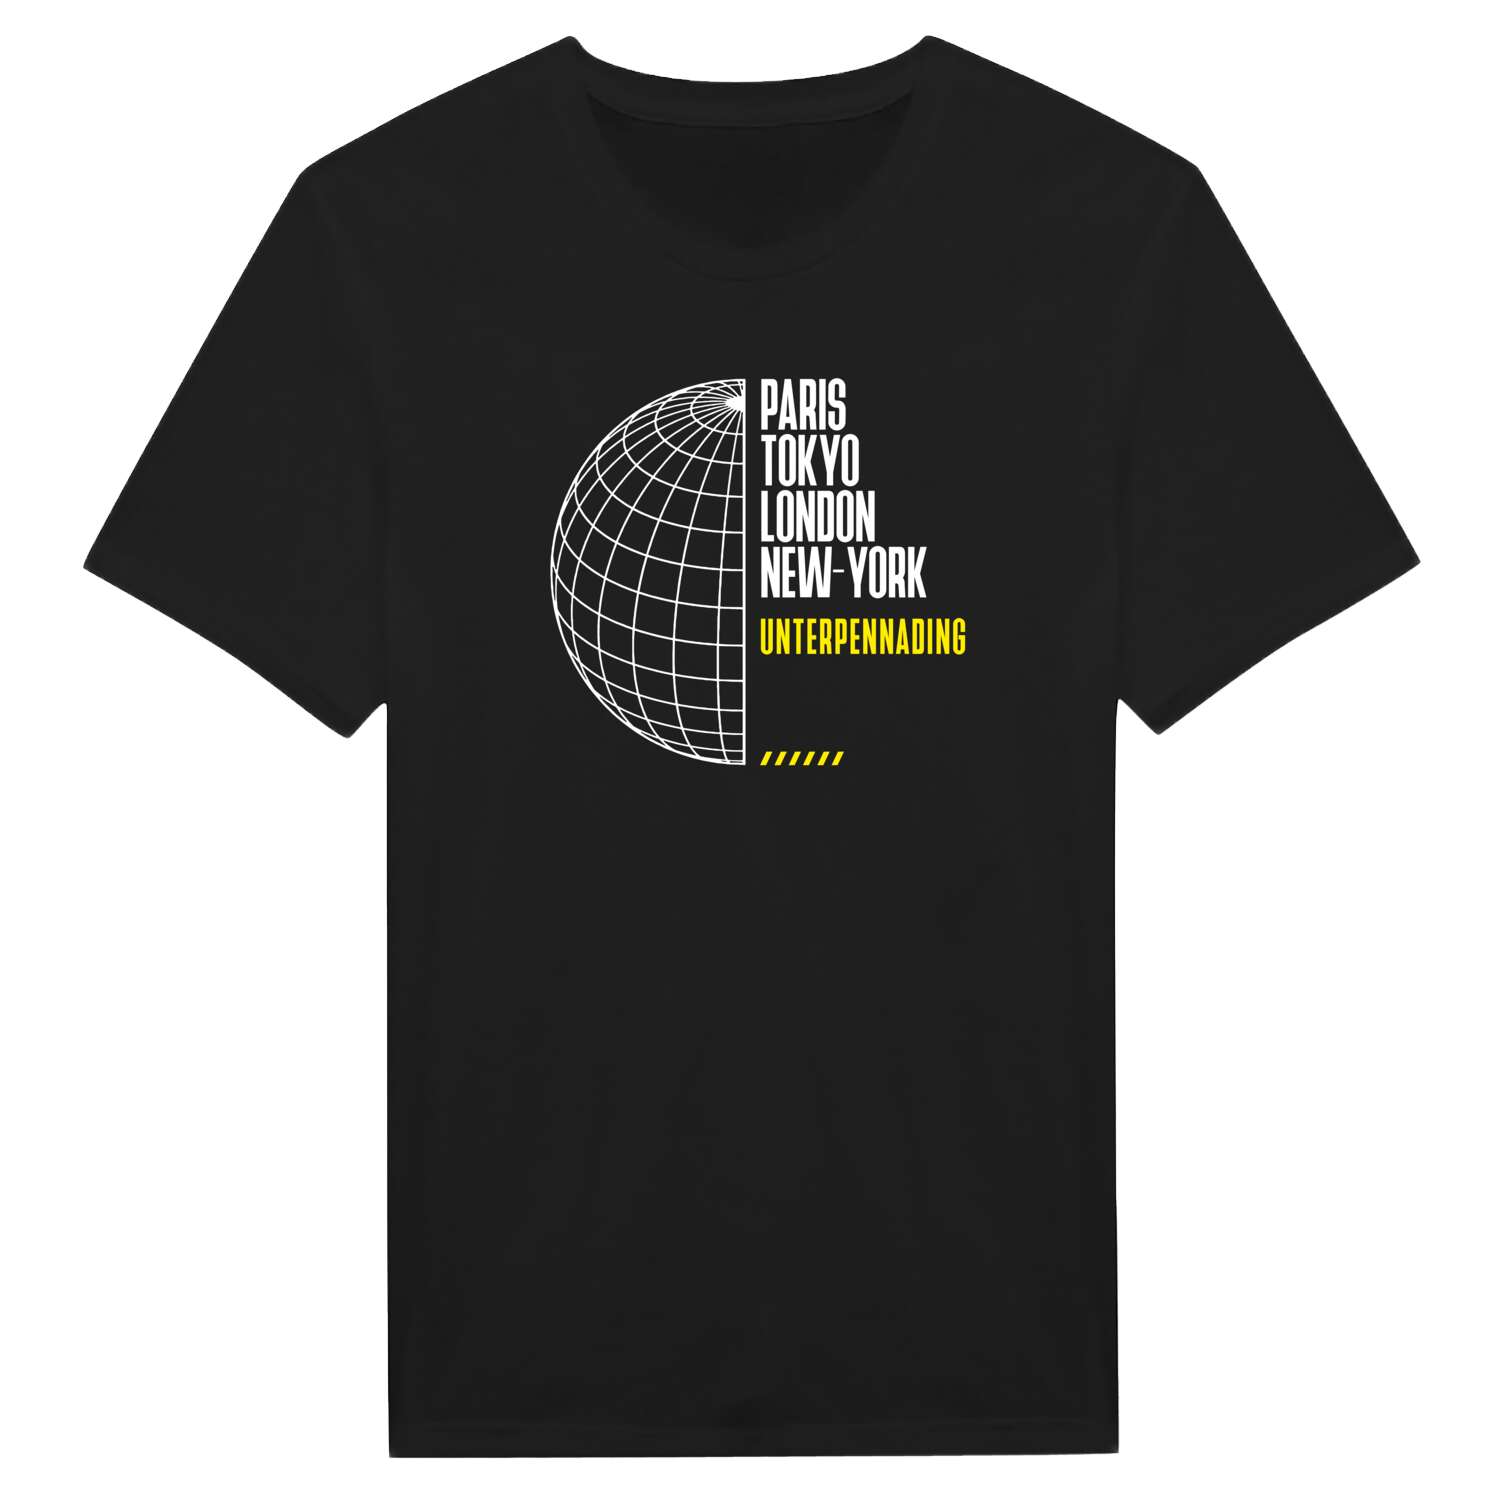 Unterpennading T-Shirt »Paris Tokyo London«